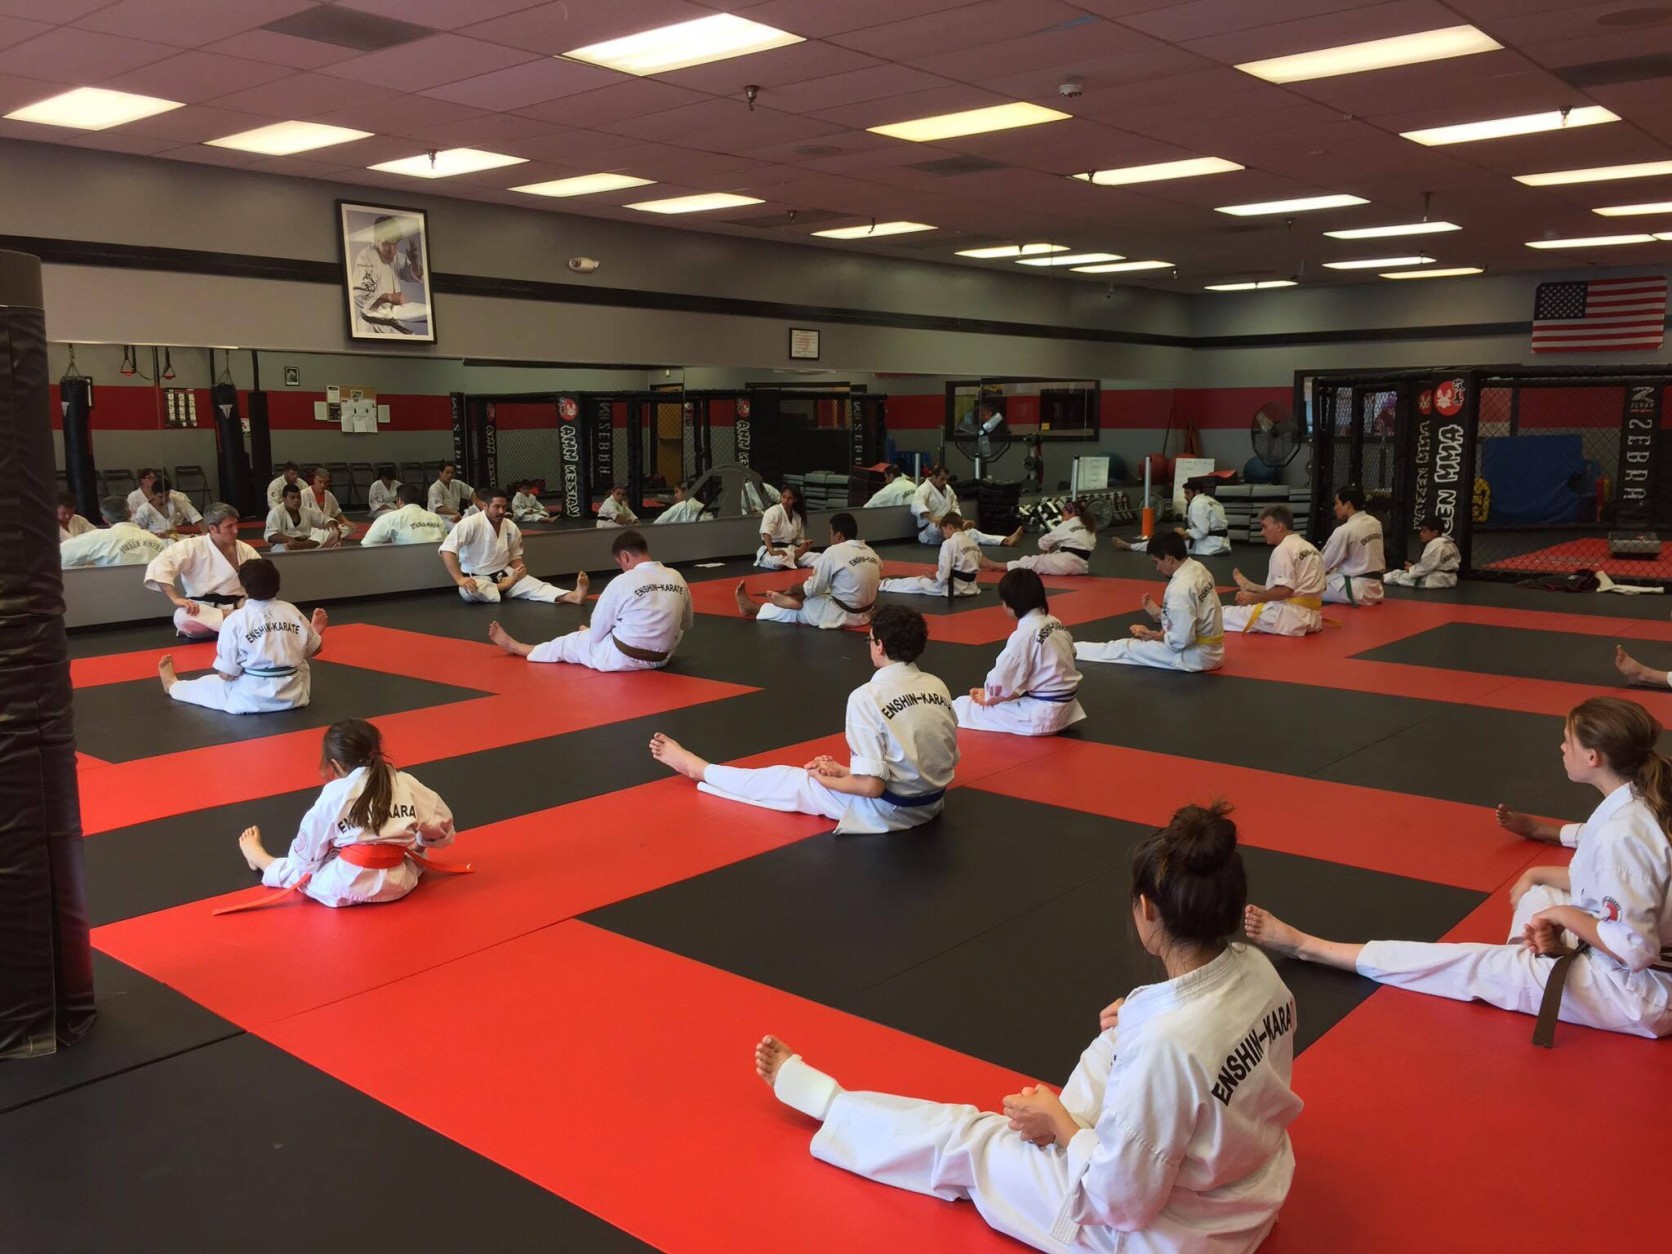 More than martial arts: Local karate schools teach values after school